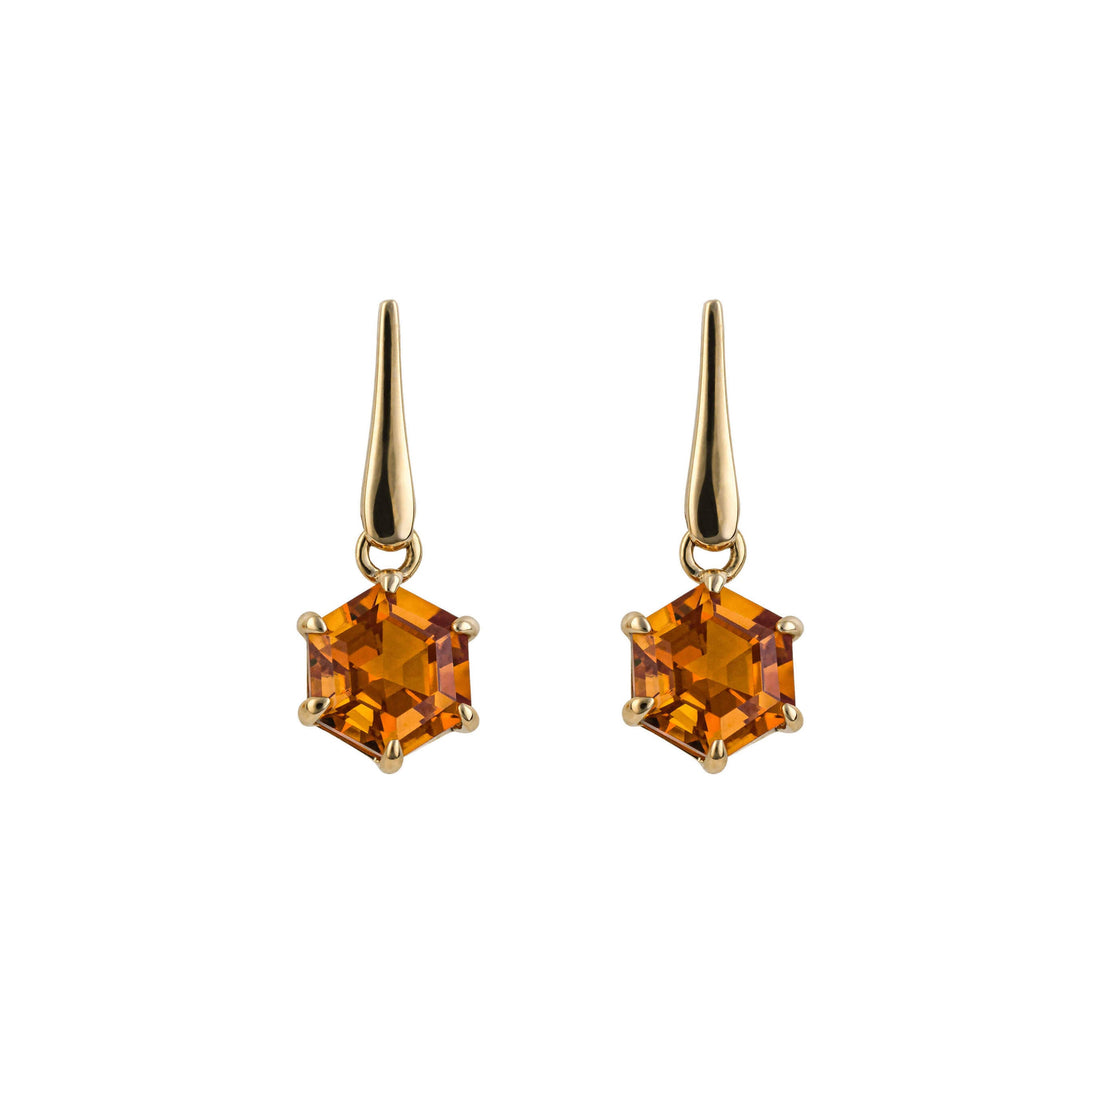 Hexagonal Citrine Drop Earrings in 9ct Yellow Gold - Robert Anthony Jewellers, Edinburgh